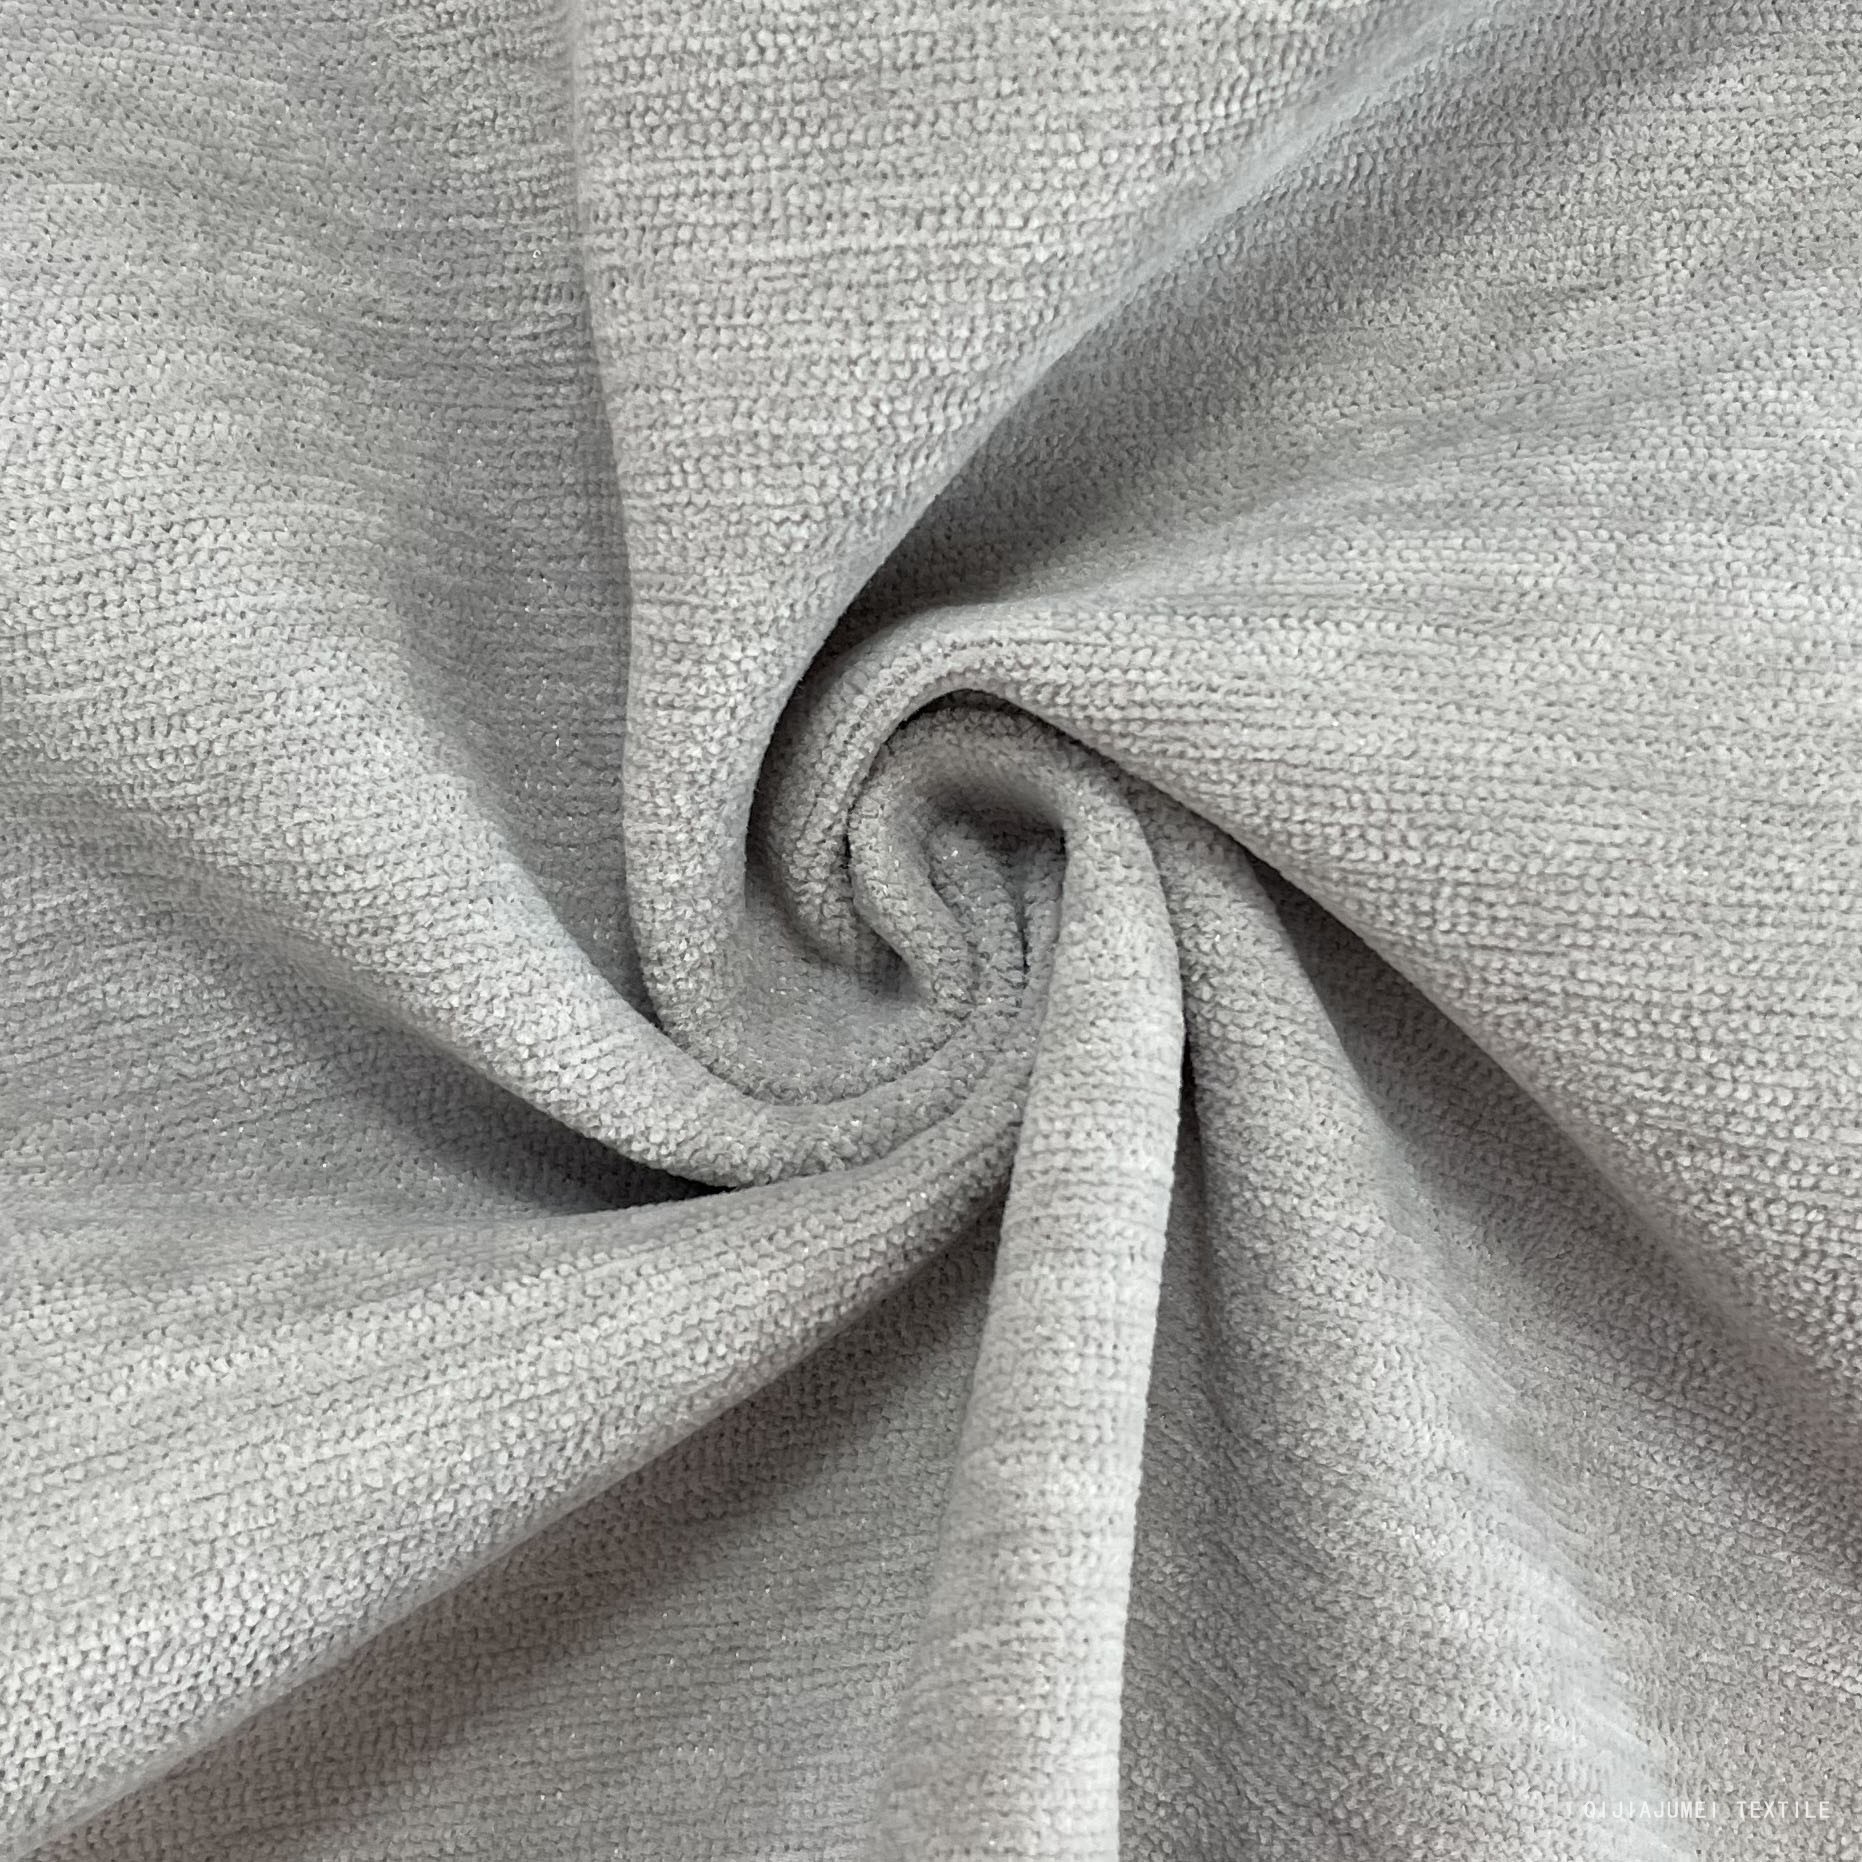 Qijiajumei Textile Stock Chenille Fabric For Slipcover